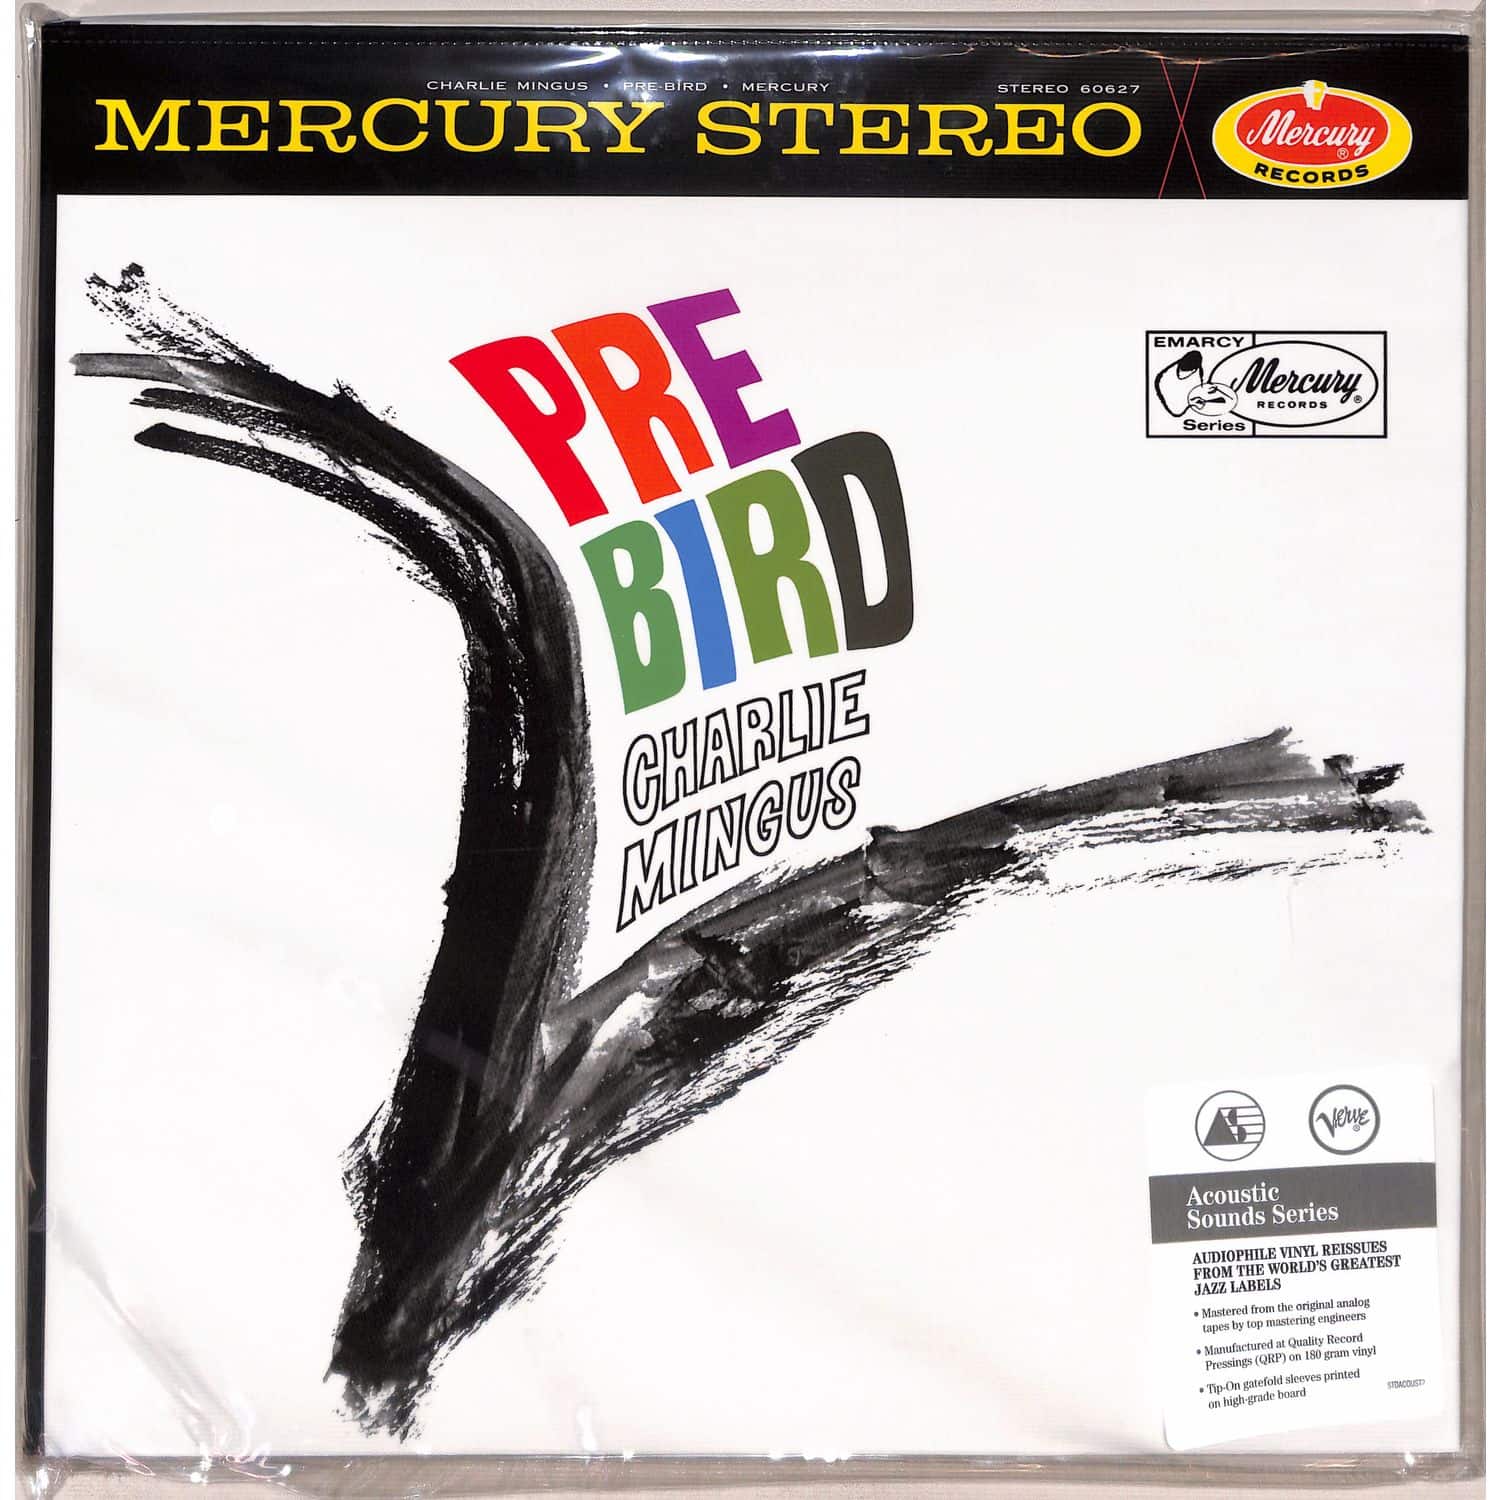 Charles Mingus - PRE-BIRD 